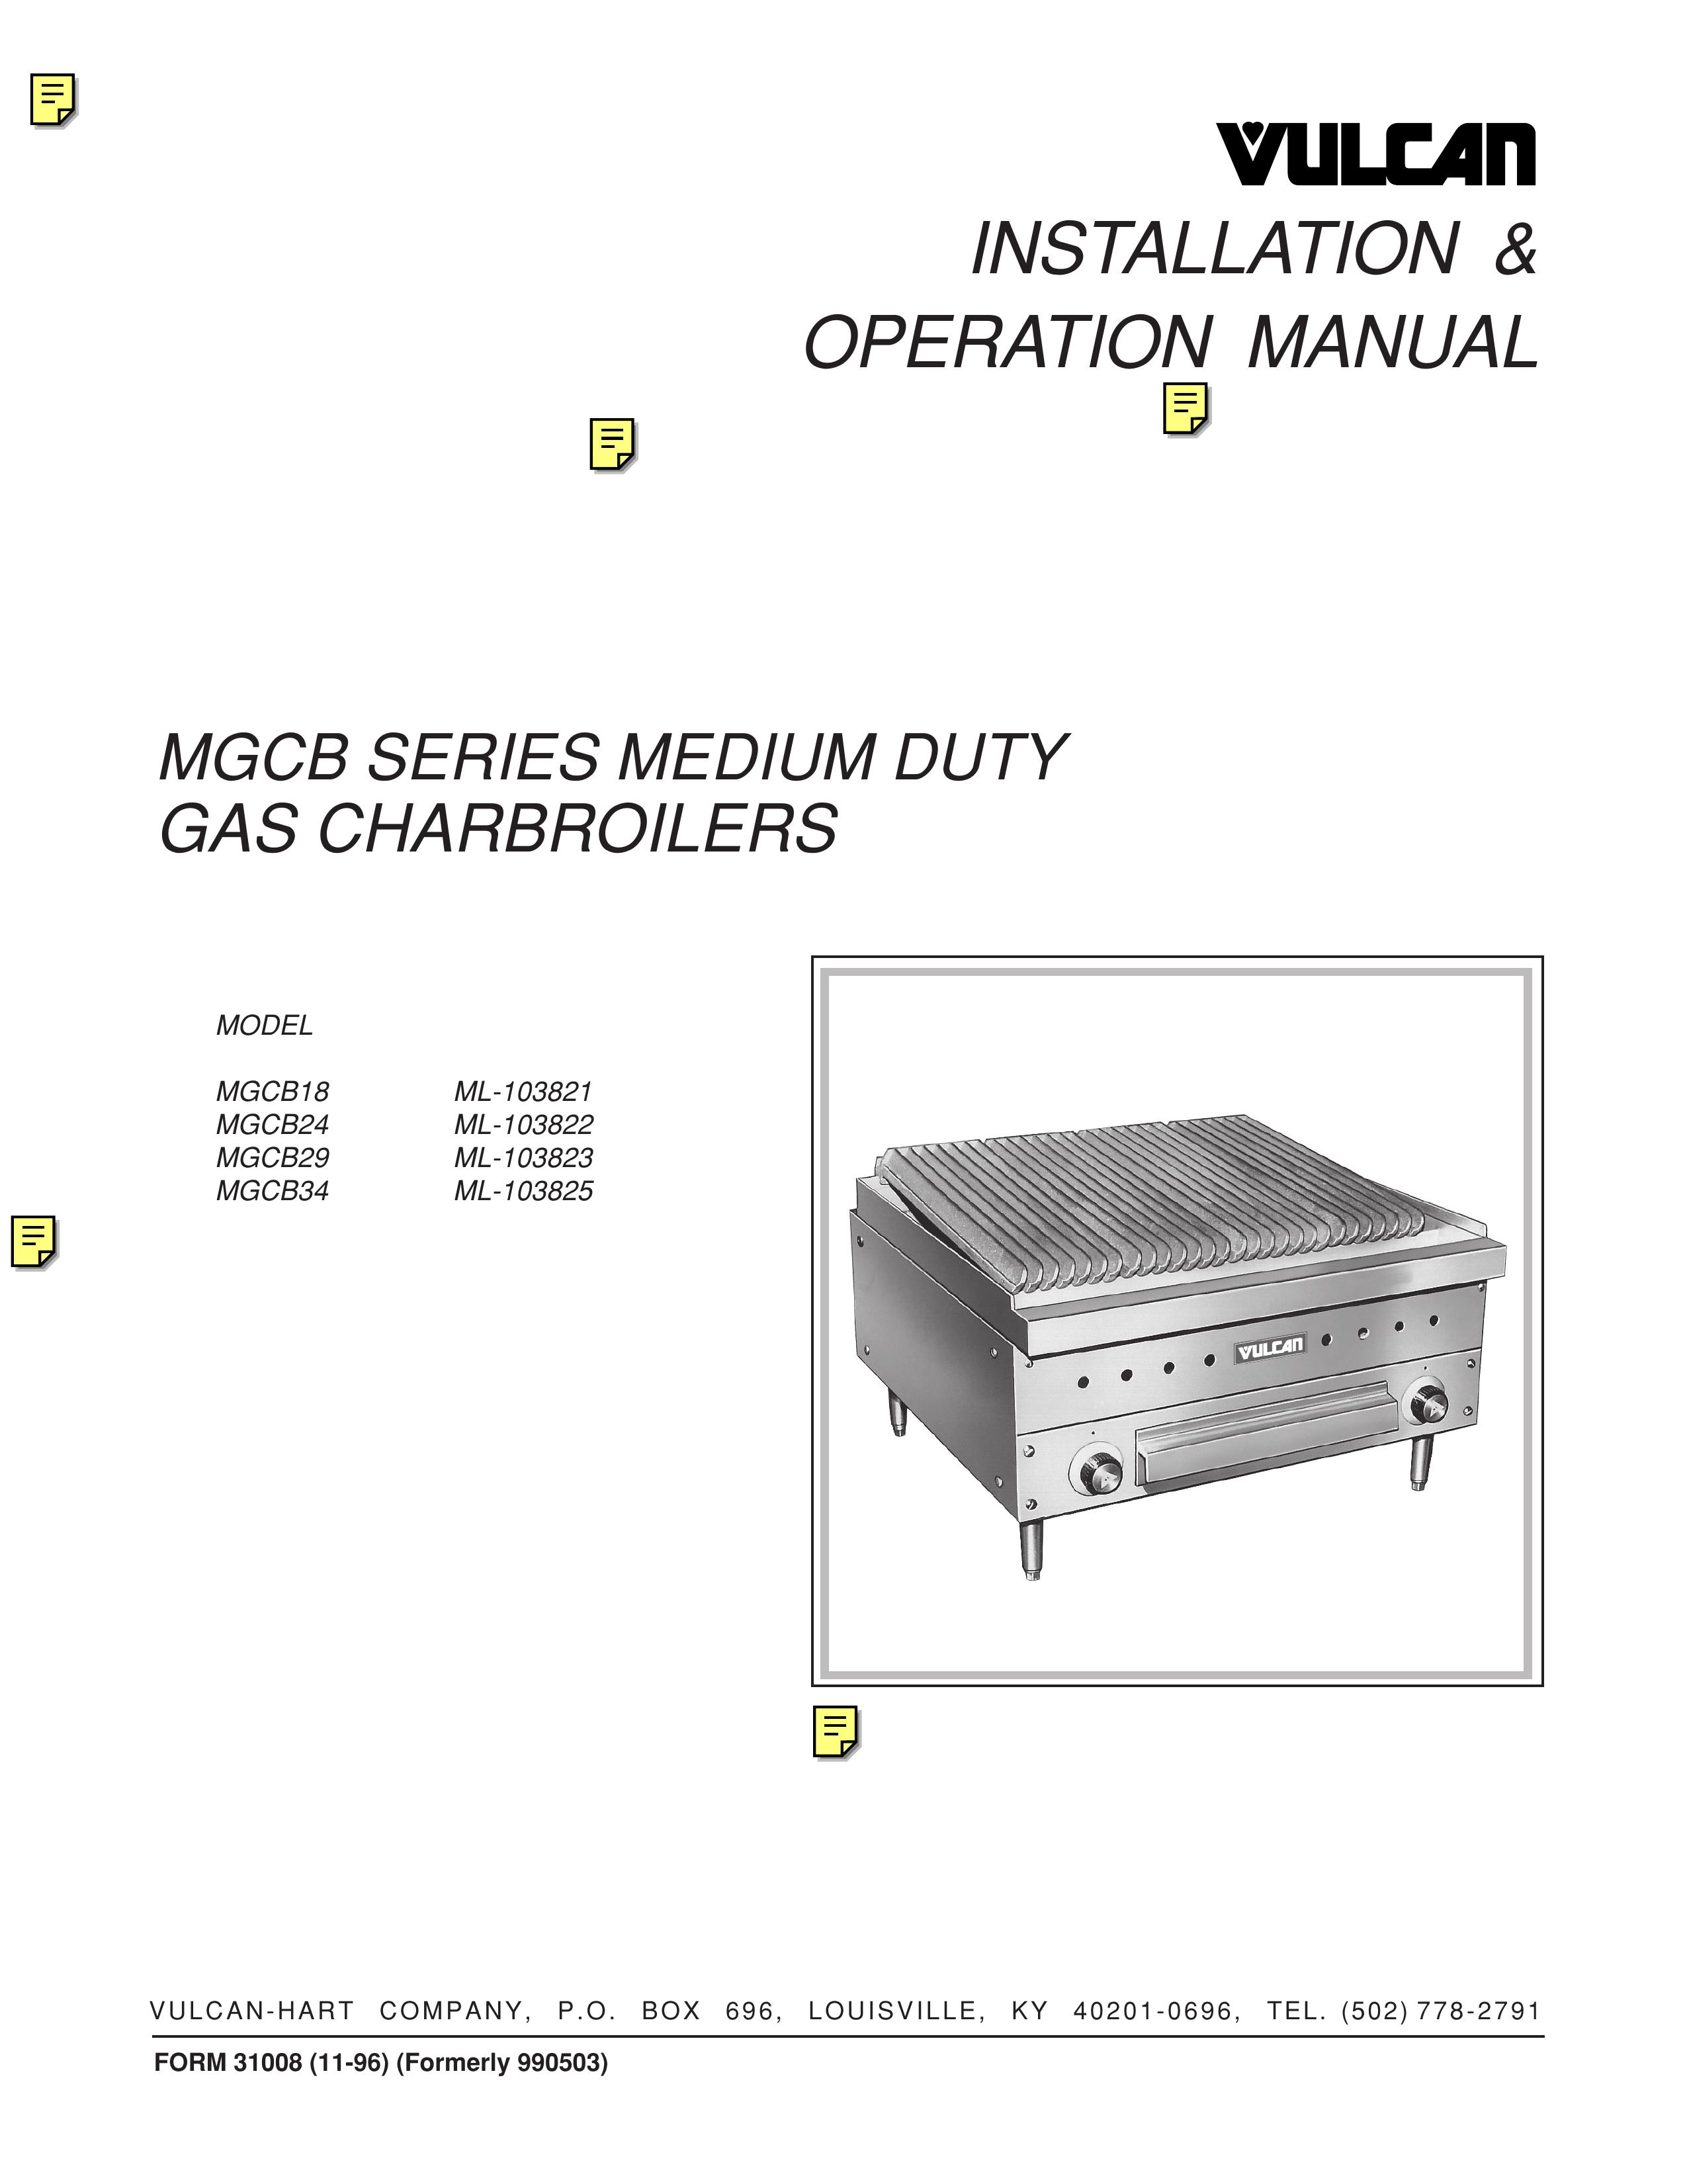 Vulcan-Hart MGCB29 Charcoal Grill User Manual